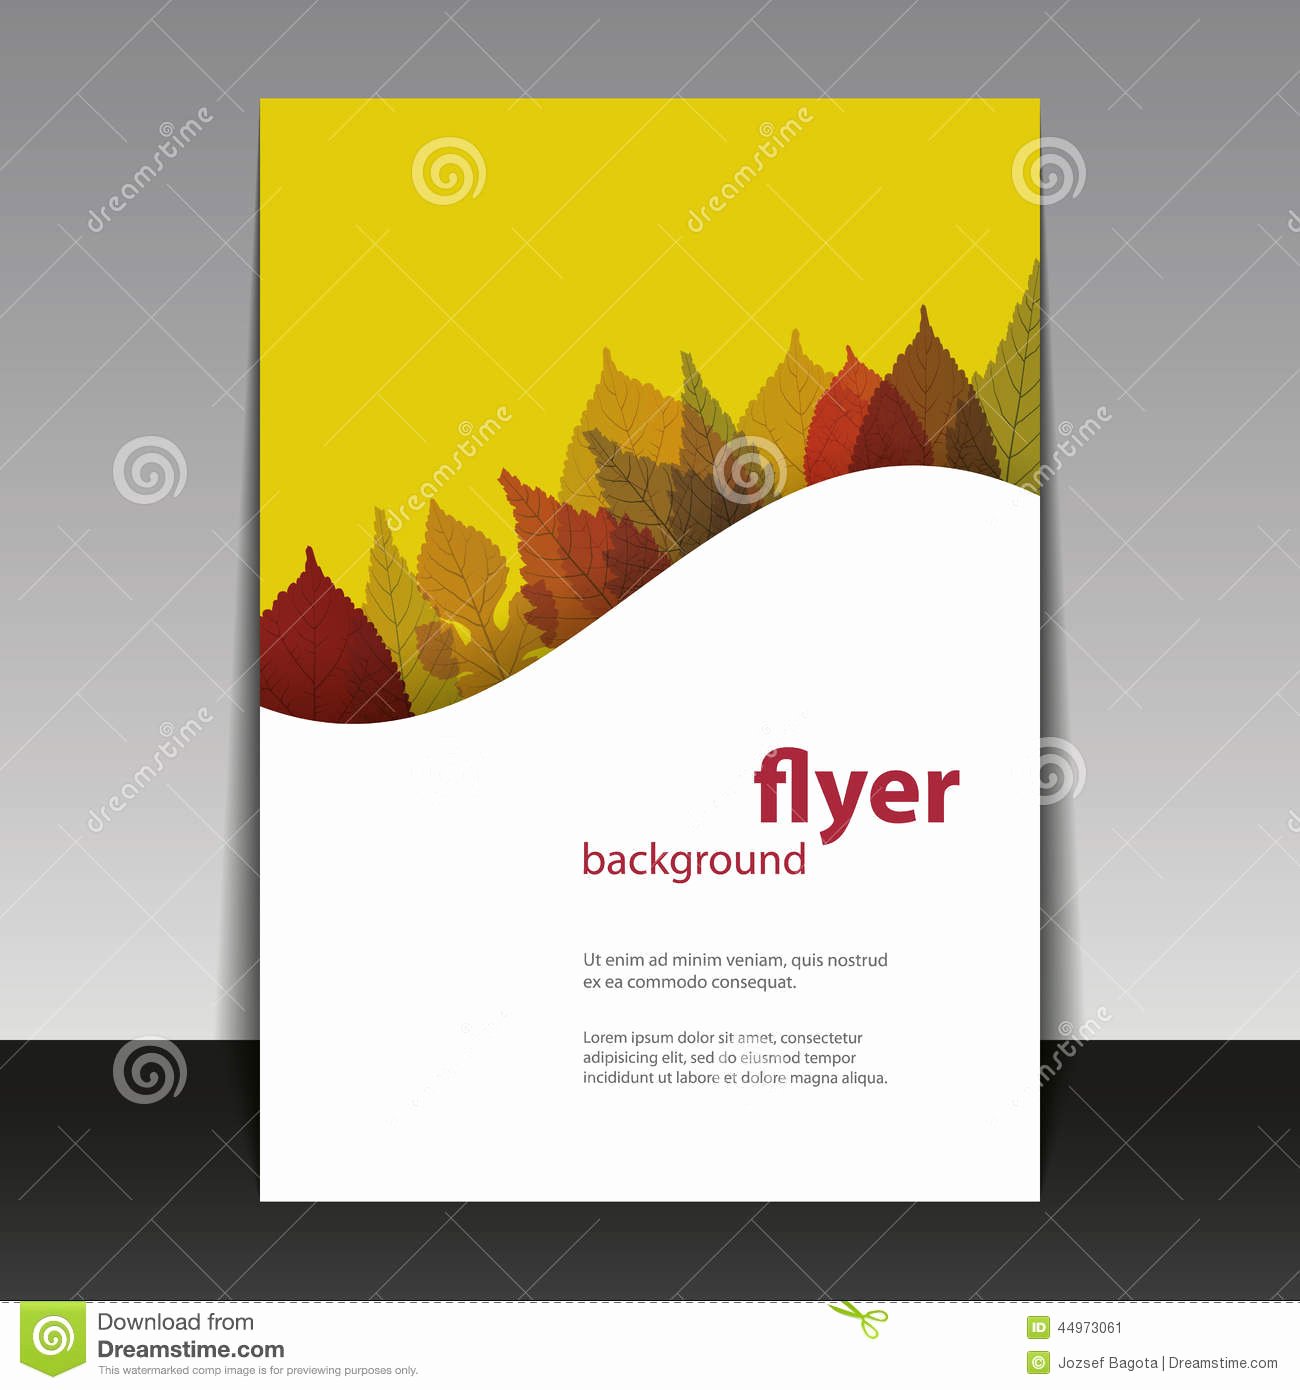 Book Cover Template Illustrator Unique Flyer Cover Design Autumn Leaves Stock Image